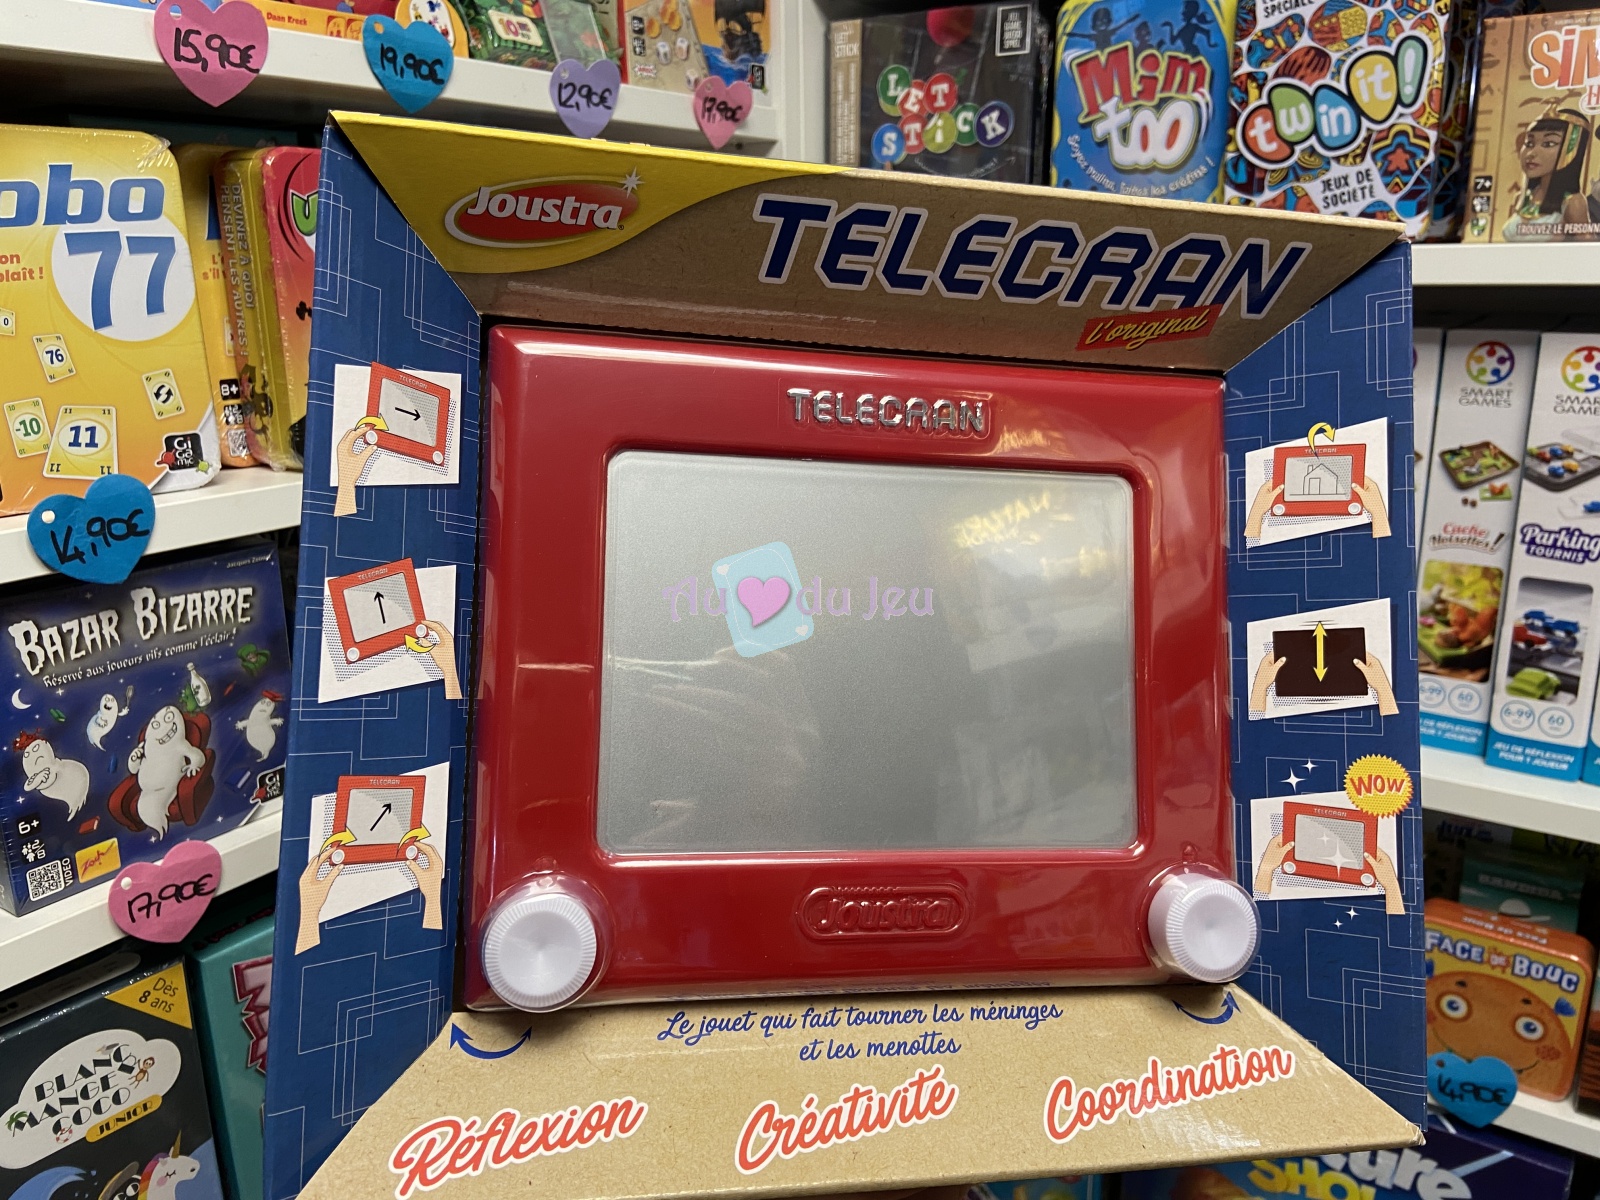 Telecran Original